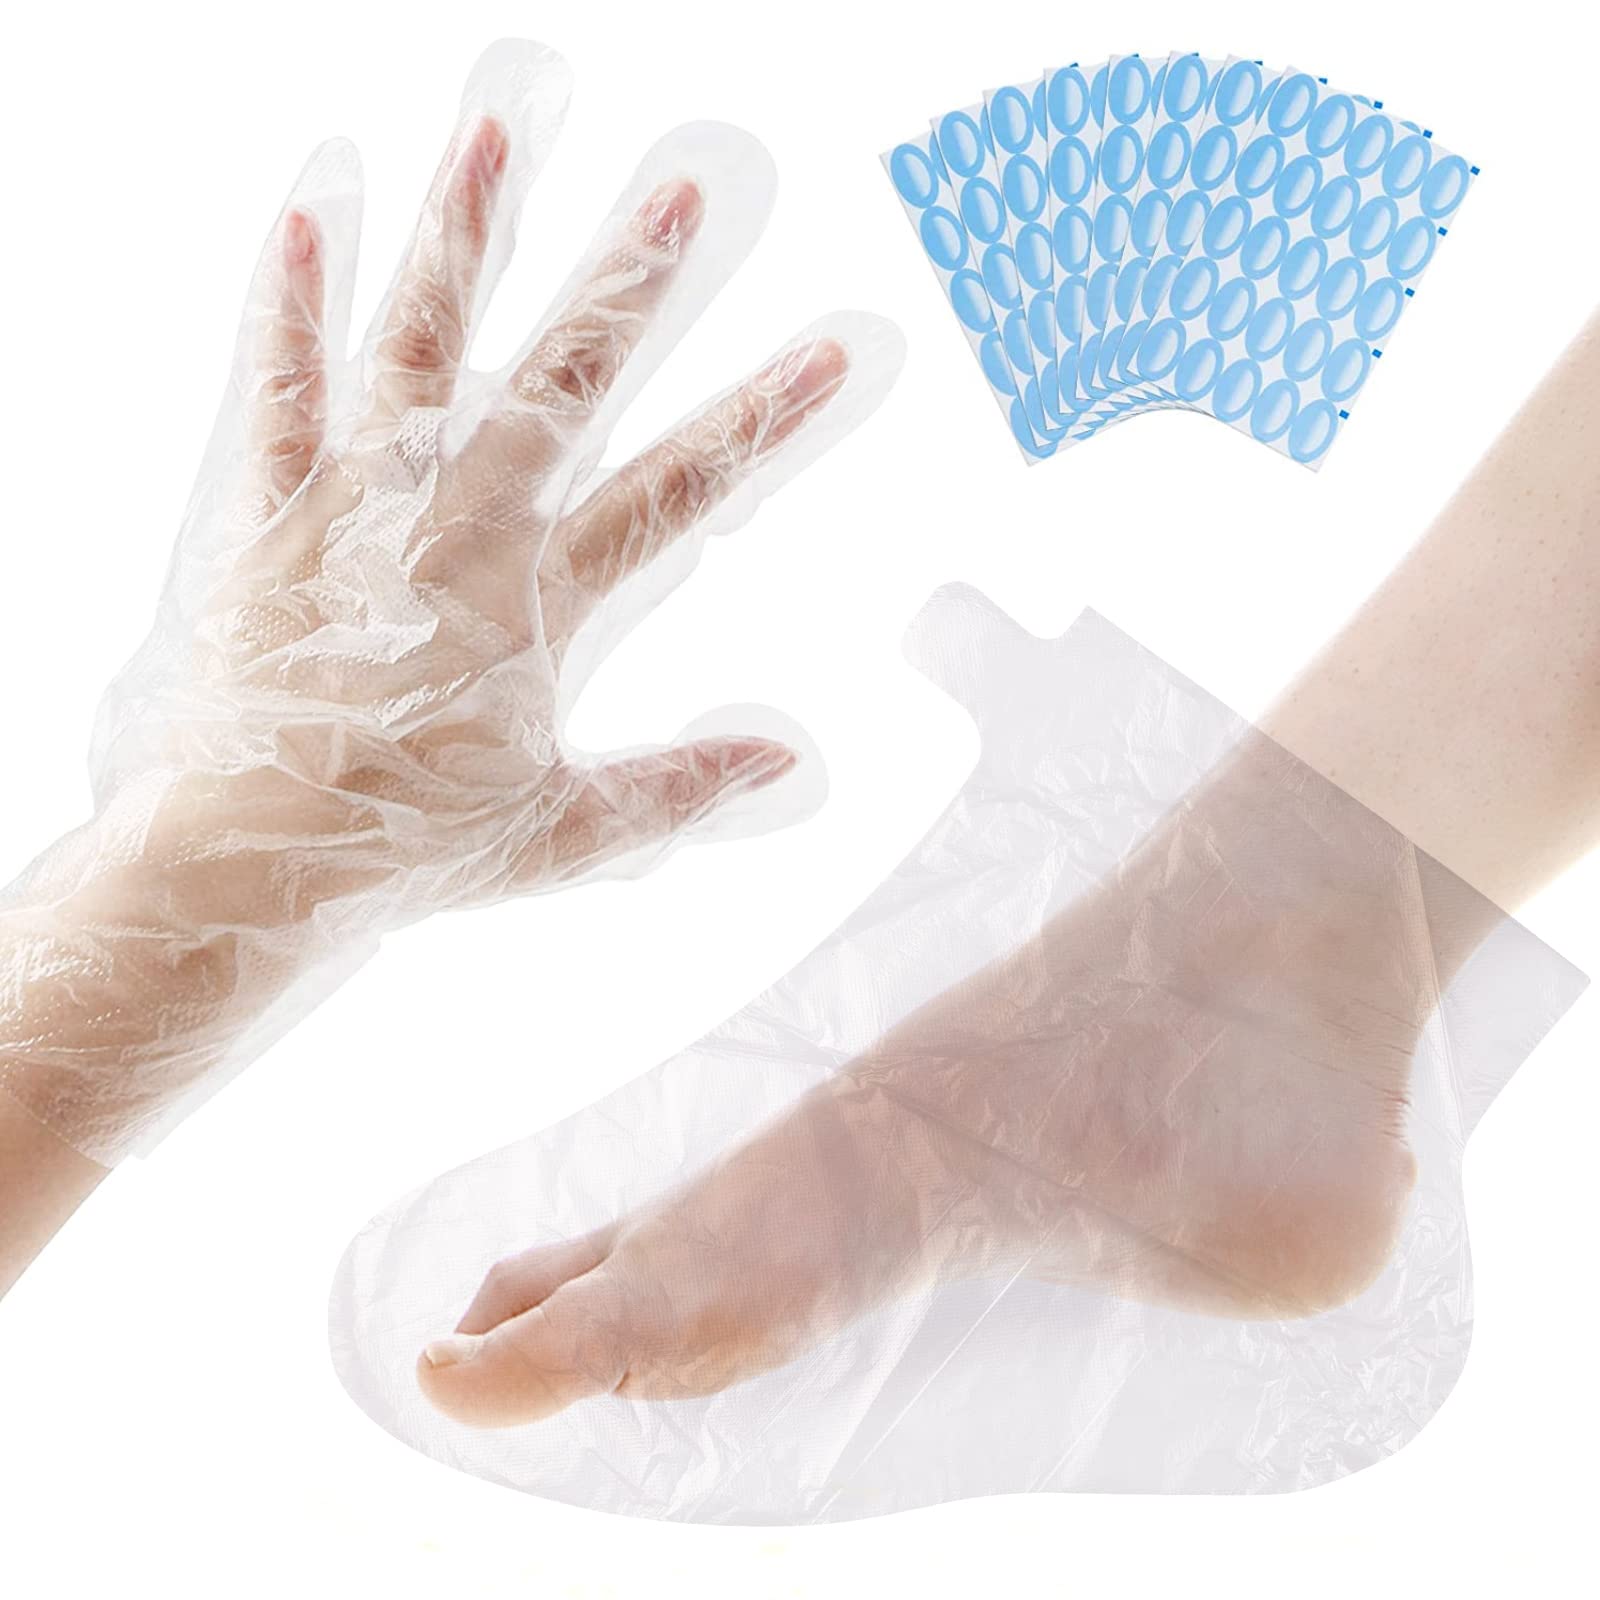 200 Pcs Paraffin Wax Bath Liners Hands & Feet, Disposable Plastic